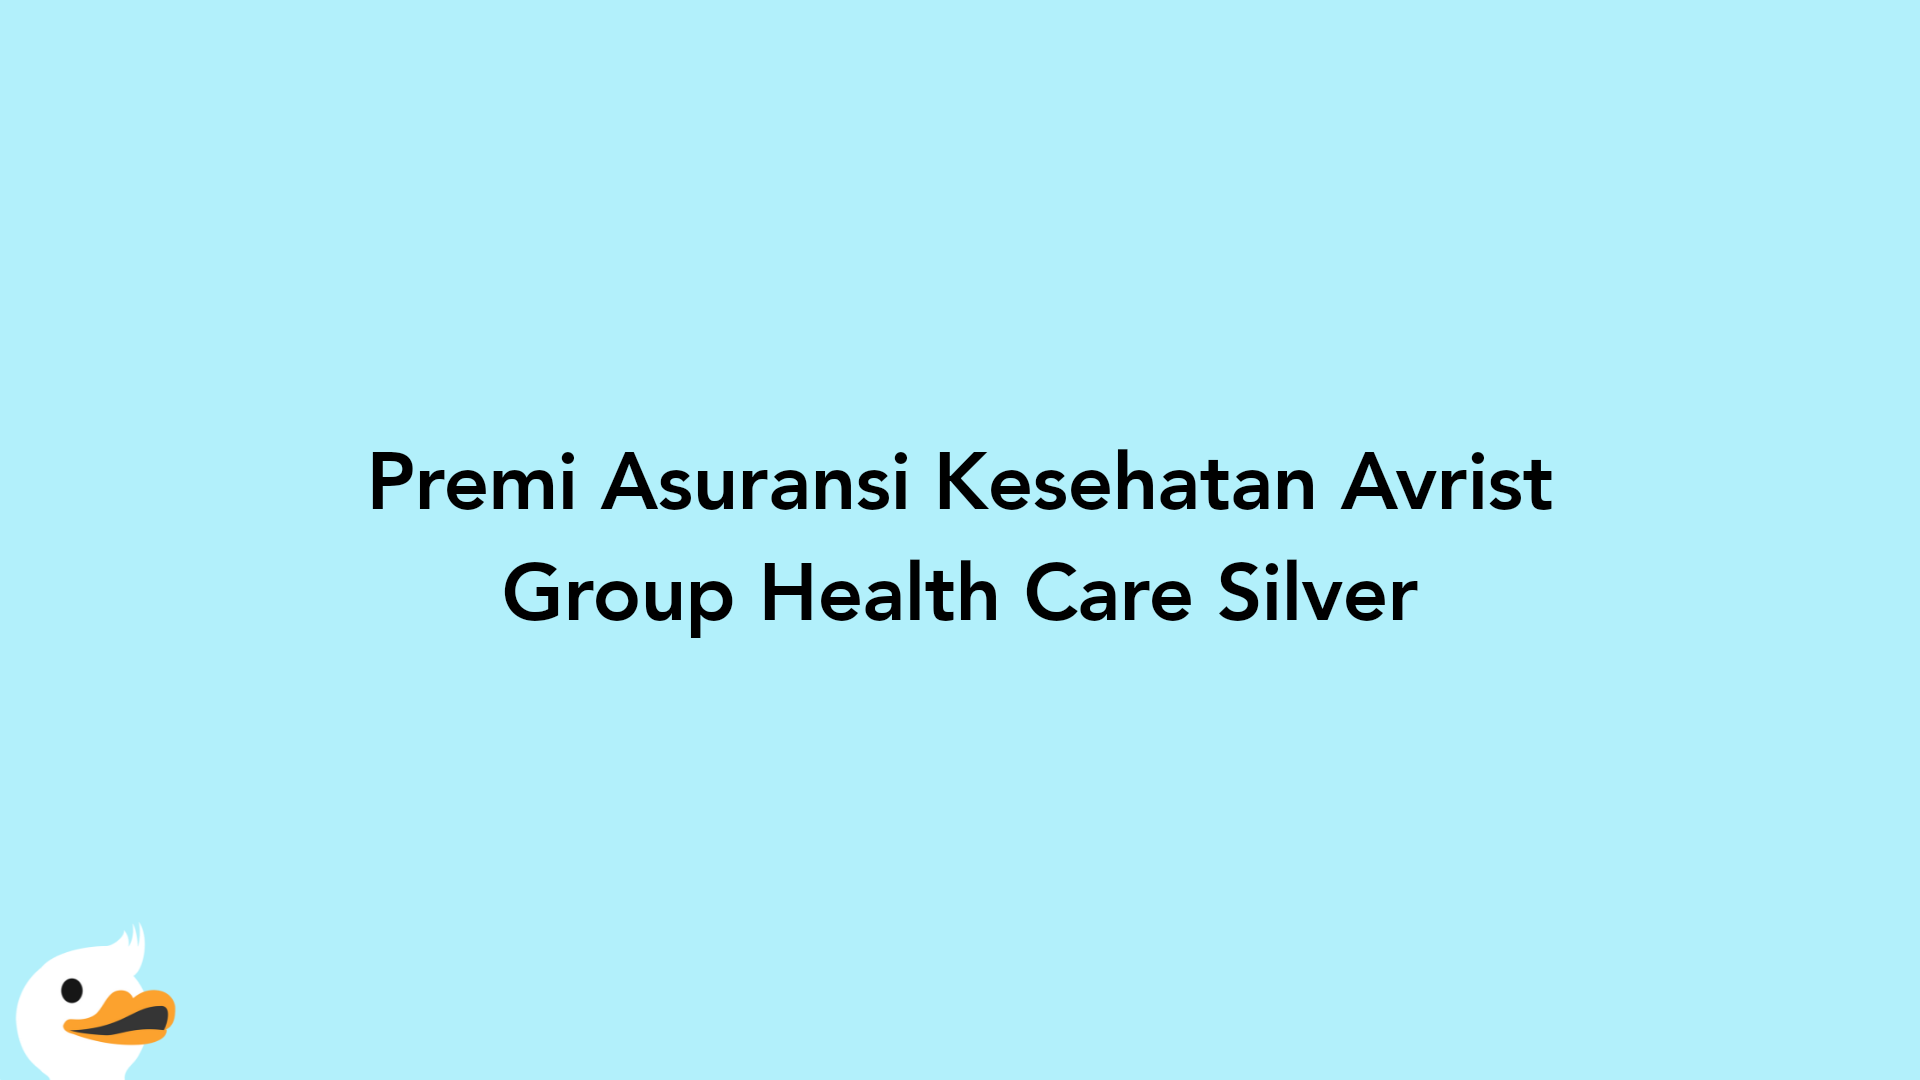 Premi Asuransi Kesehatan Avrist Group Health Care Silver